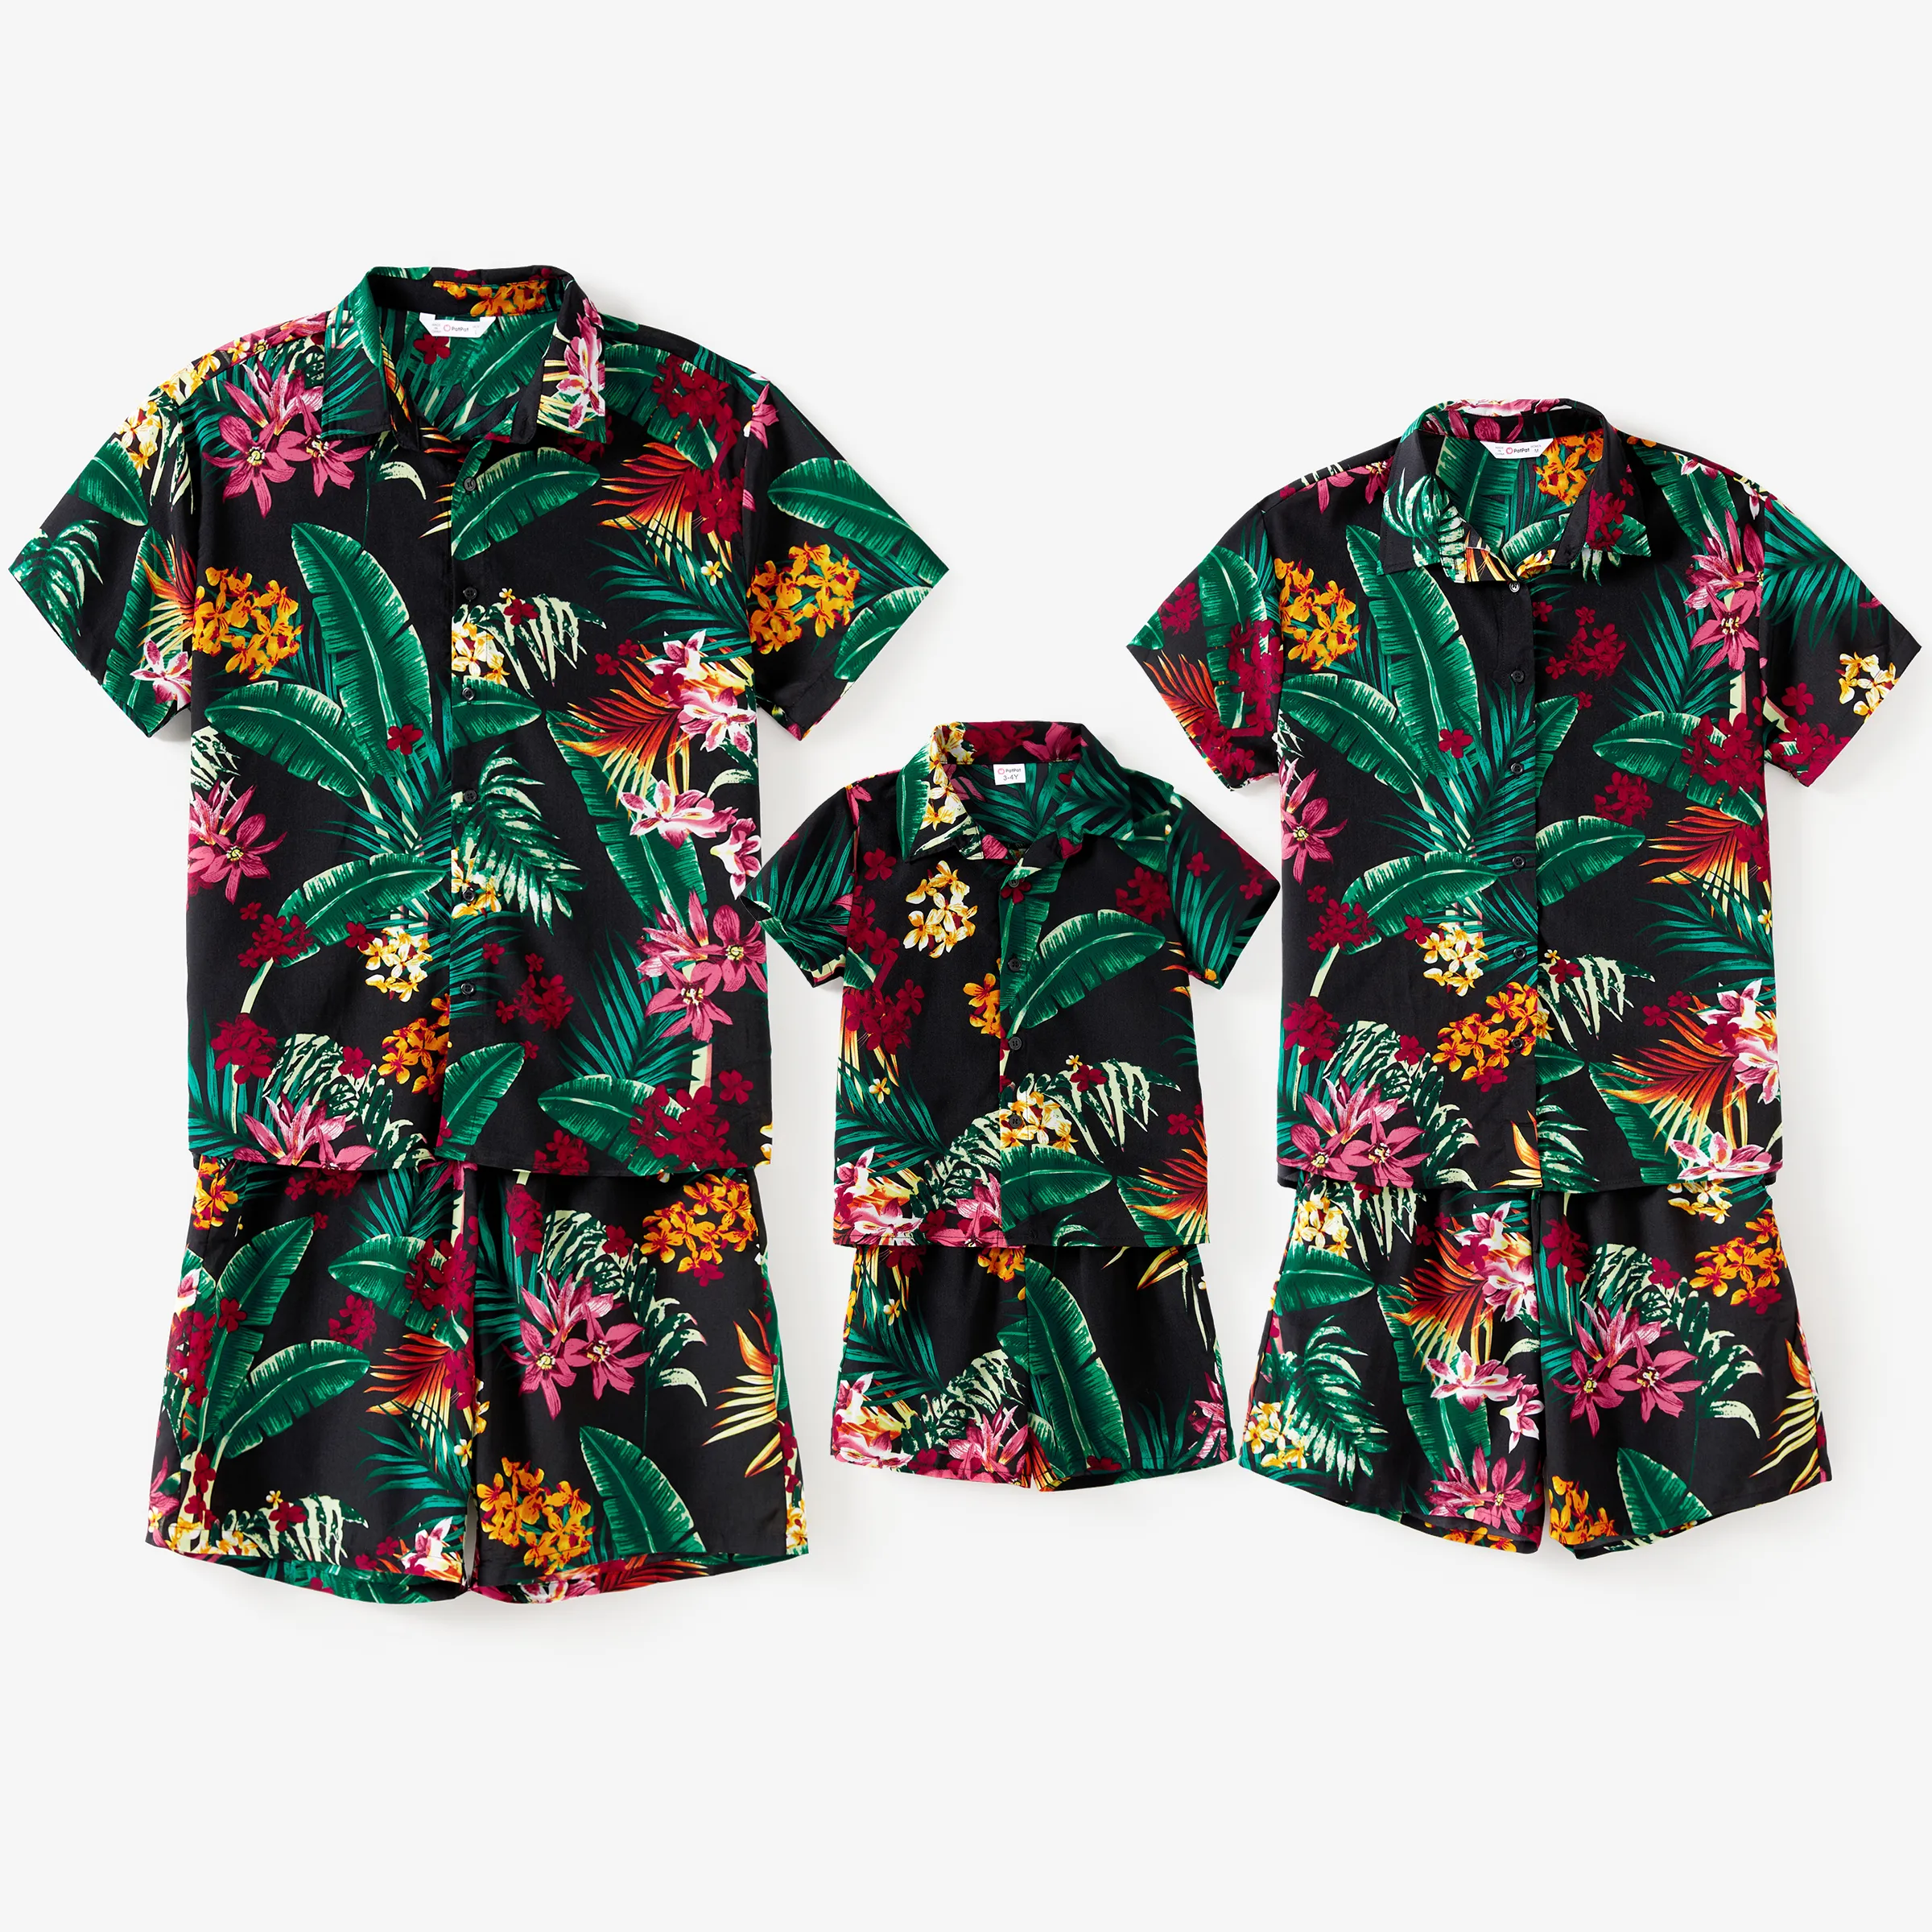 Family Matching Sets 熱帶植物花卉襯衫和帶口袋抽繩短褲